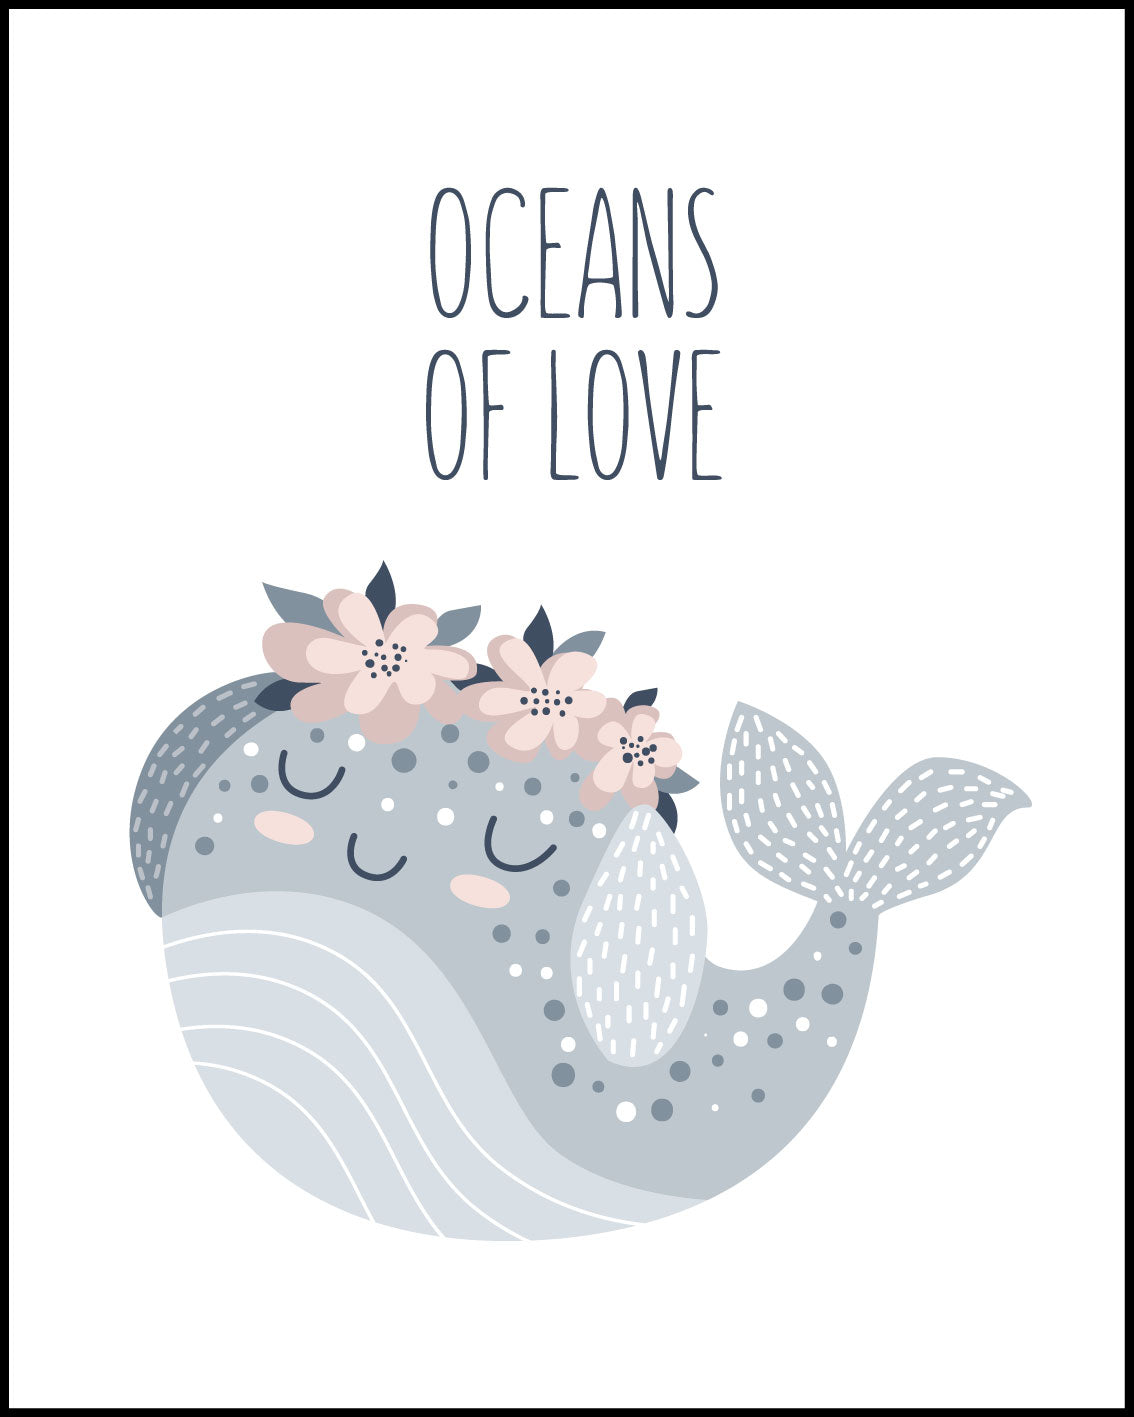 Oceans of love Poster